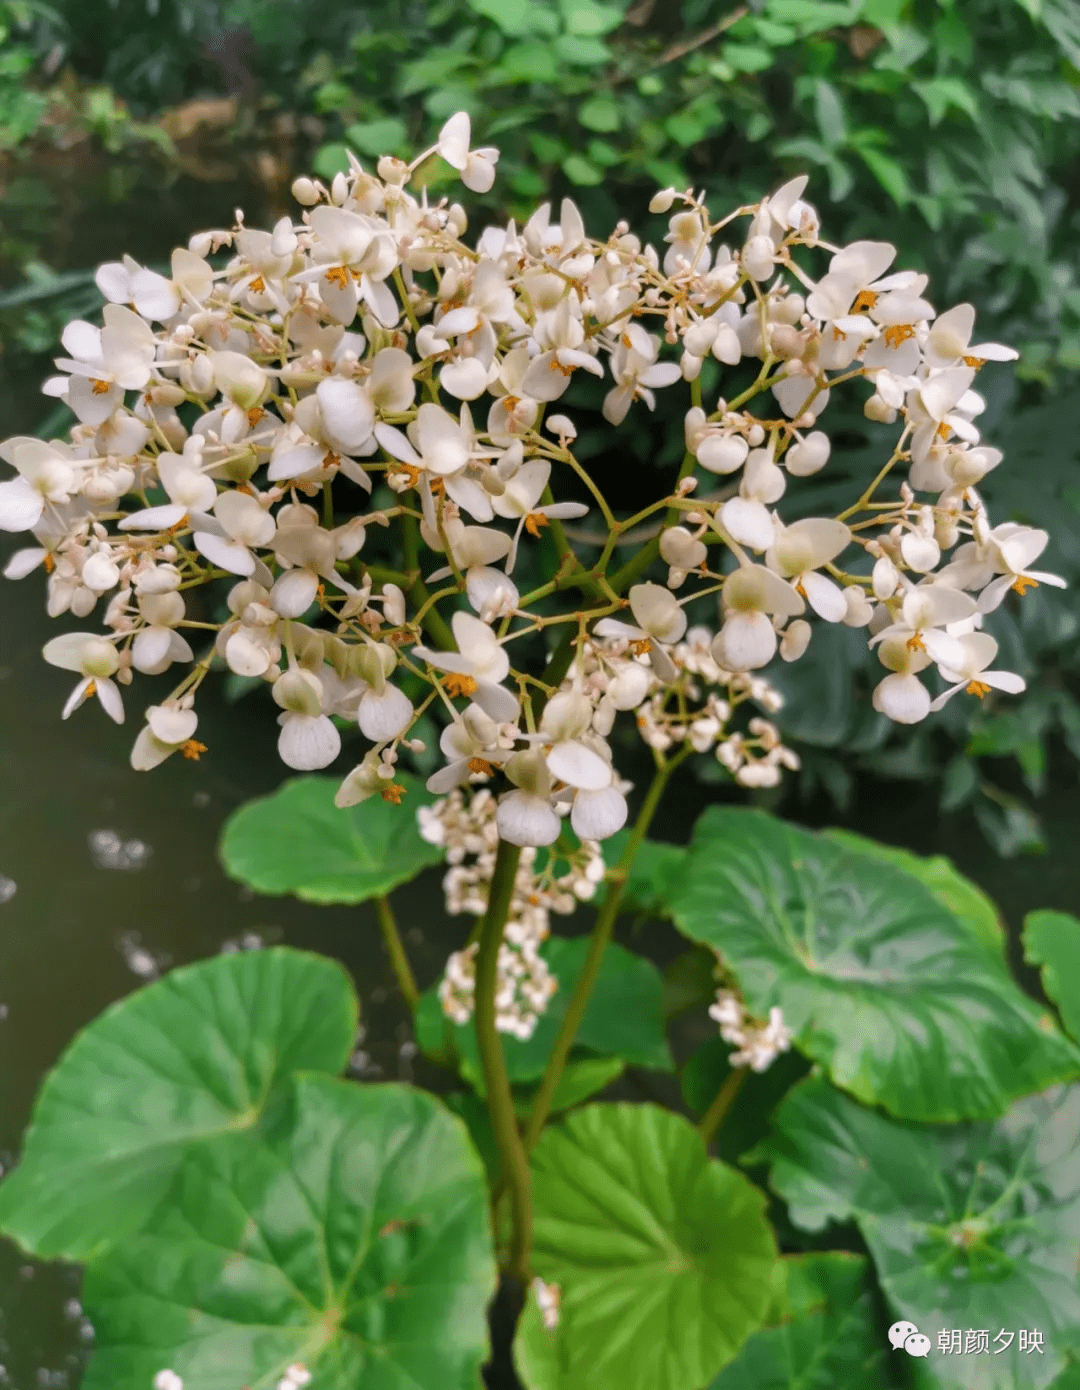 121莲叶秋海棠(begonianelumbiifolia),秋海棠科秋海棠属,&药园120